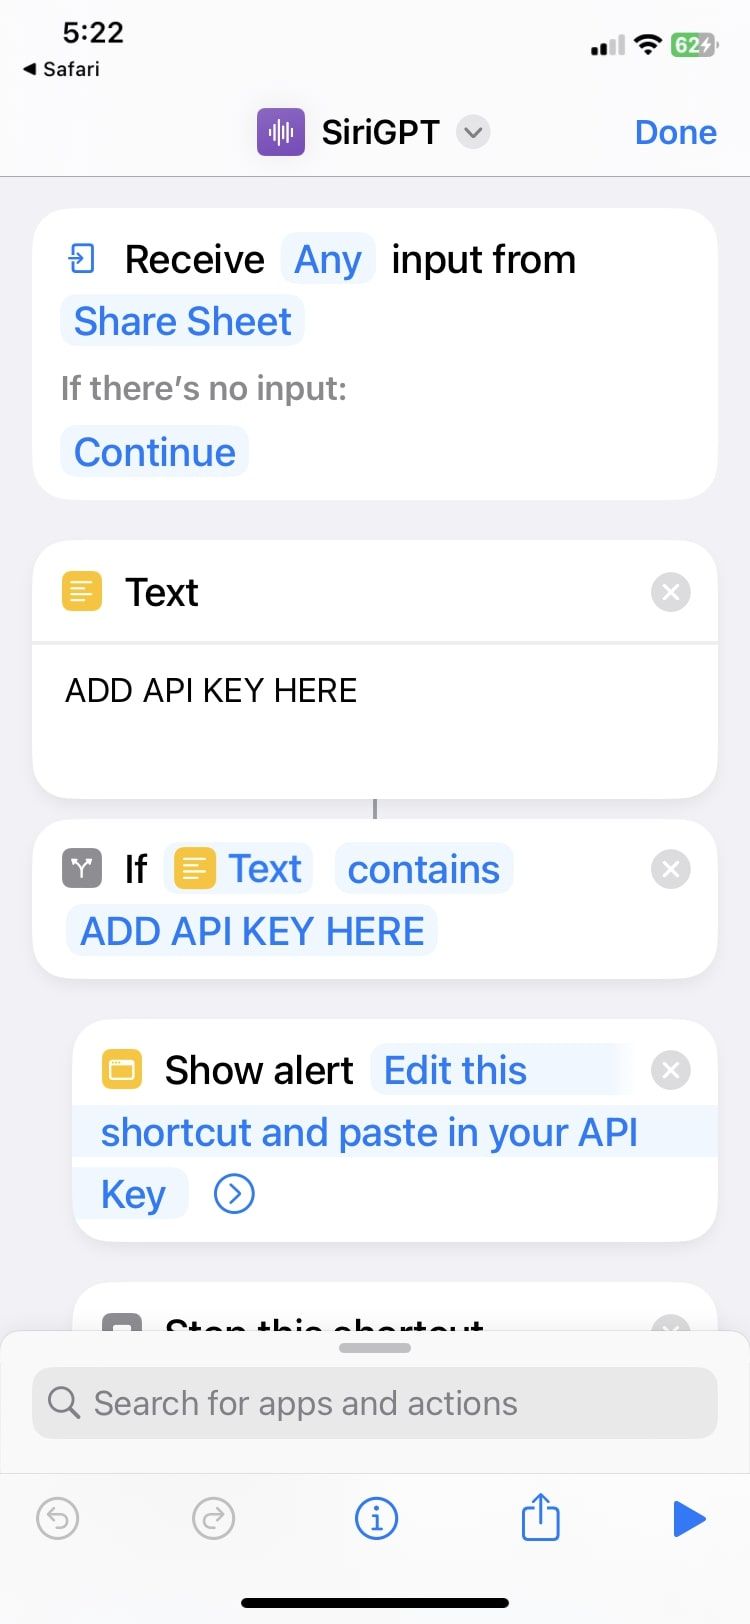 add API key here option